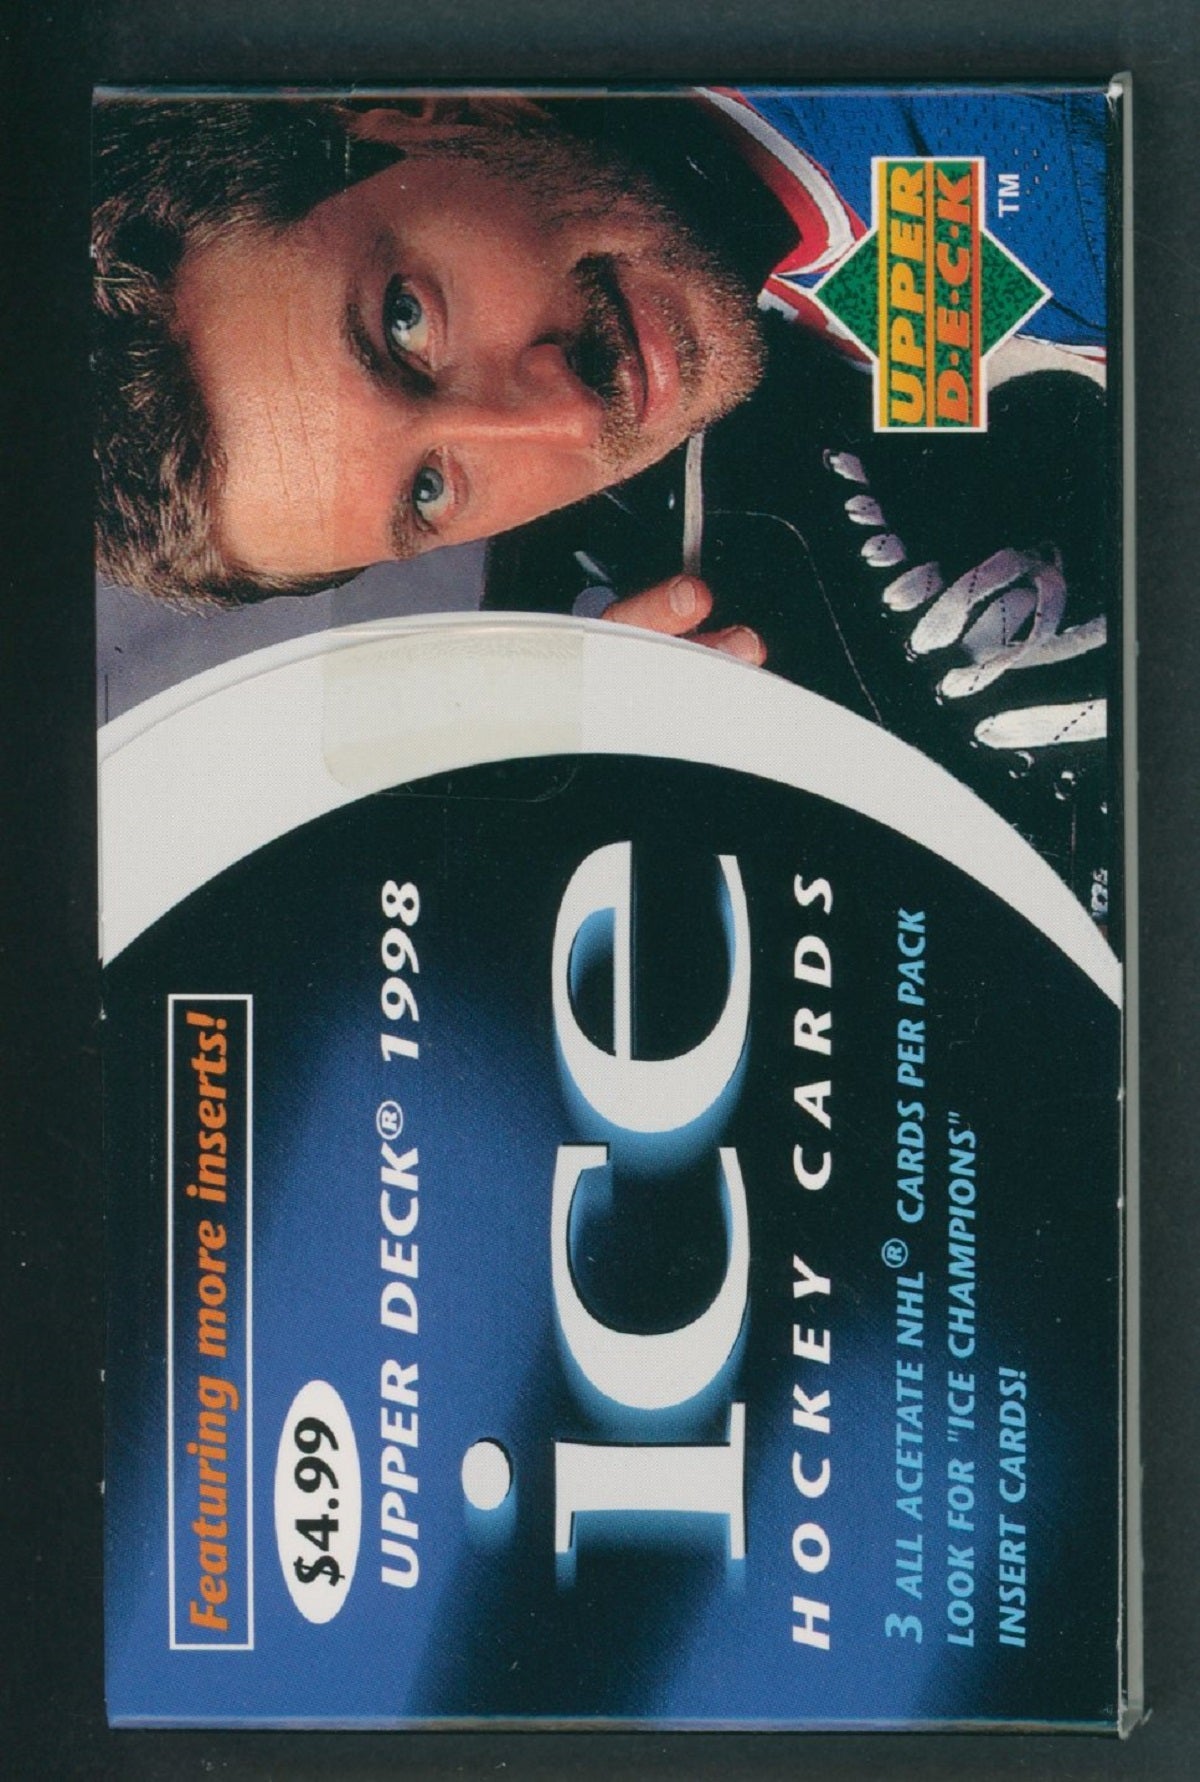 1998 Upper Deck ICE Hockey Unopened Pack (Retail)